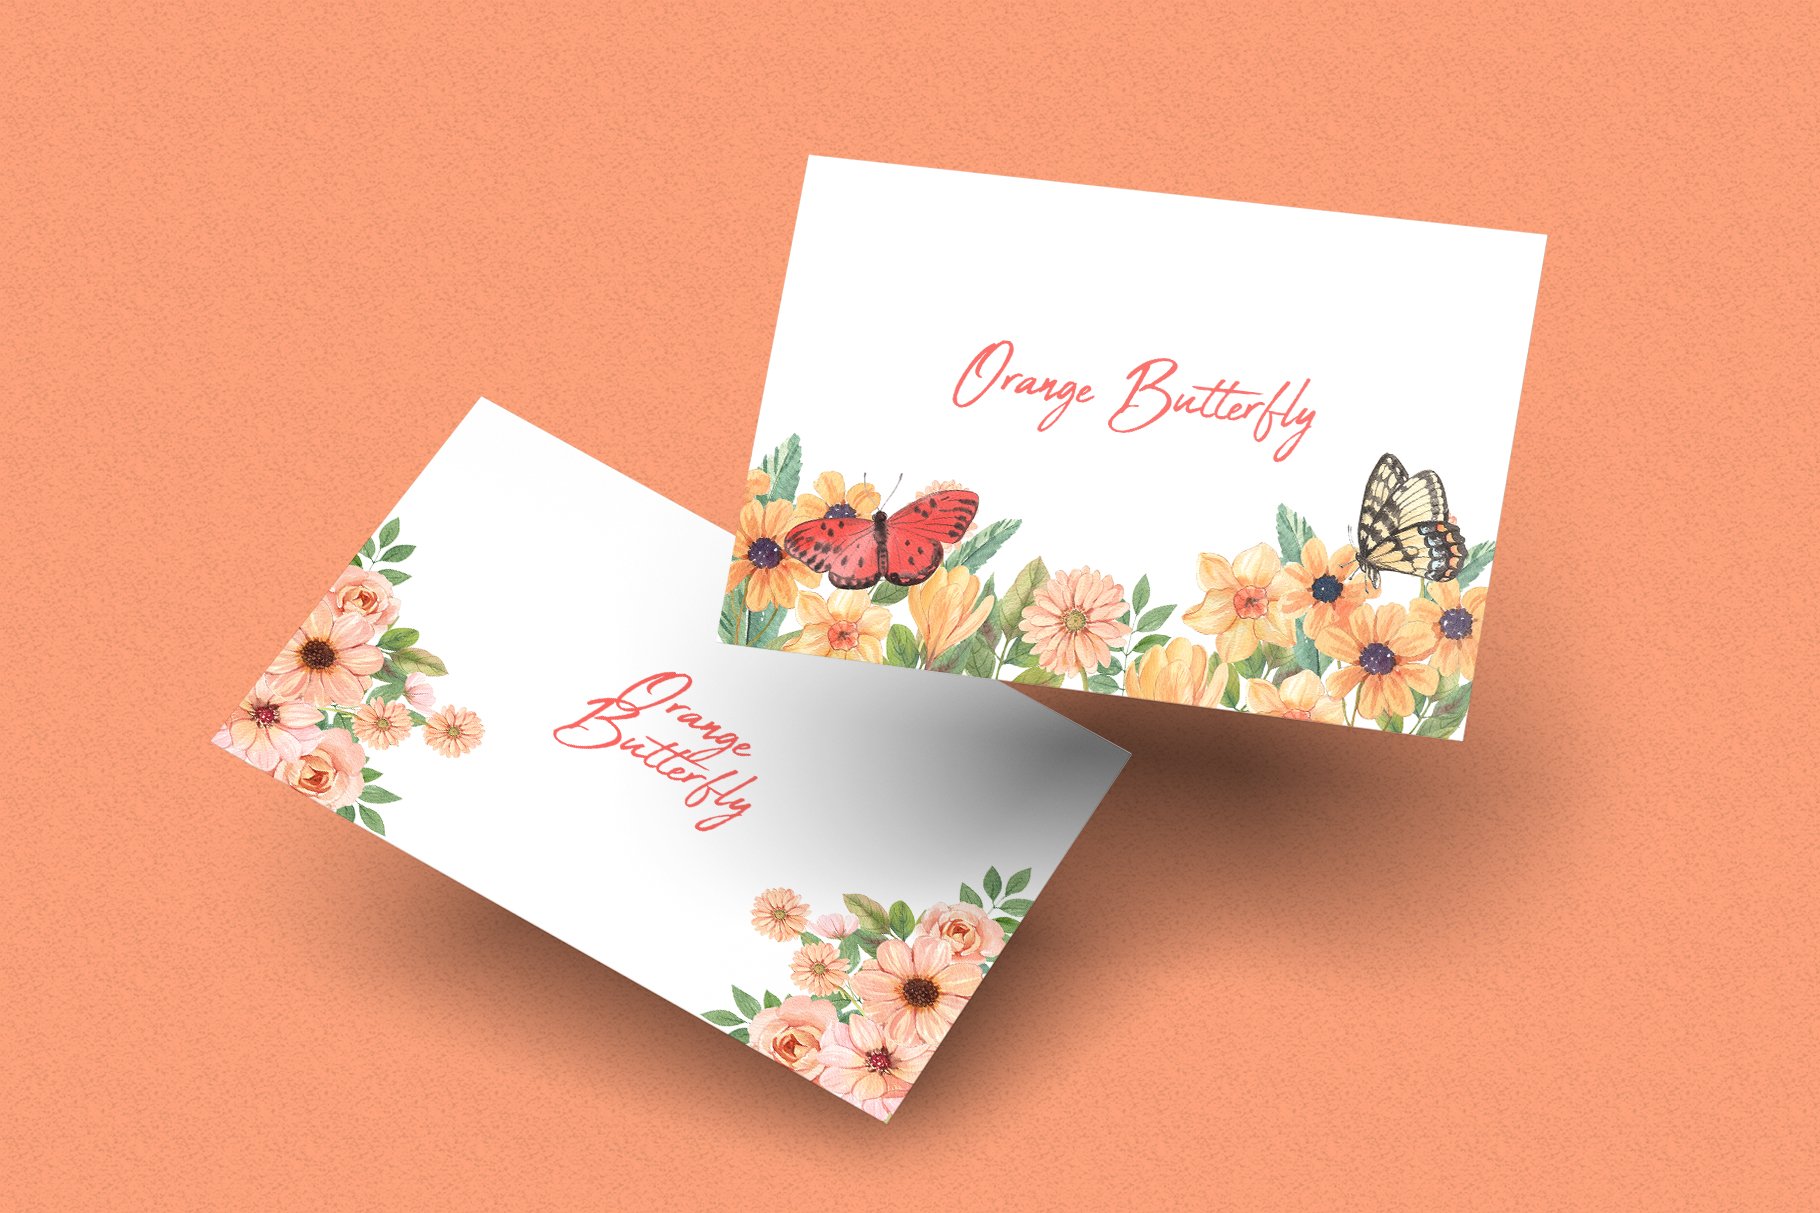 Romantic orange butterfly presentation cards.